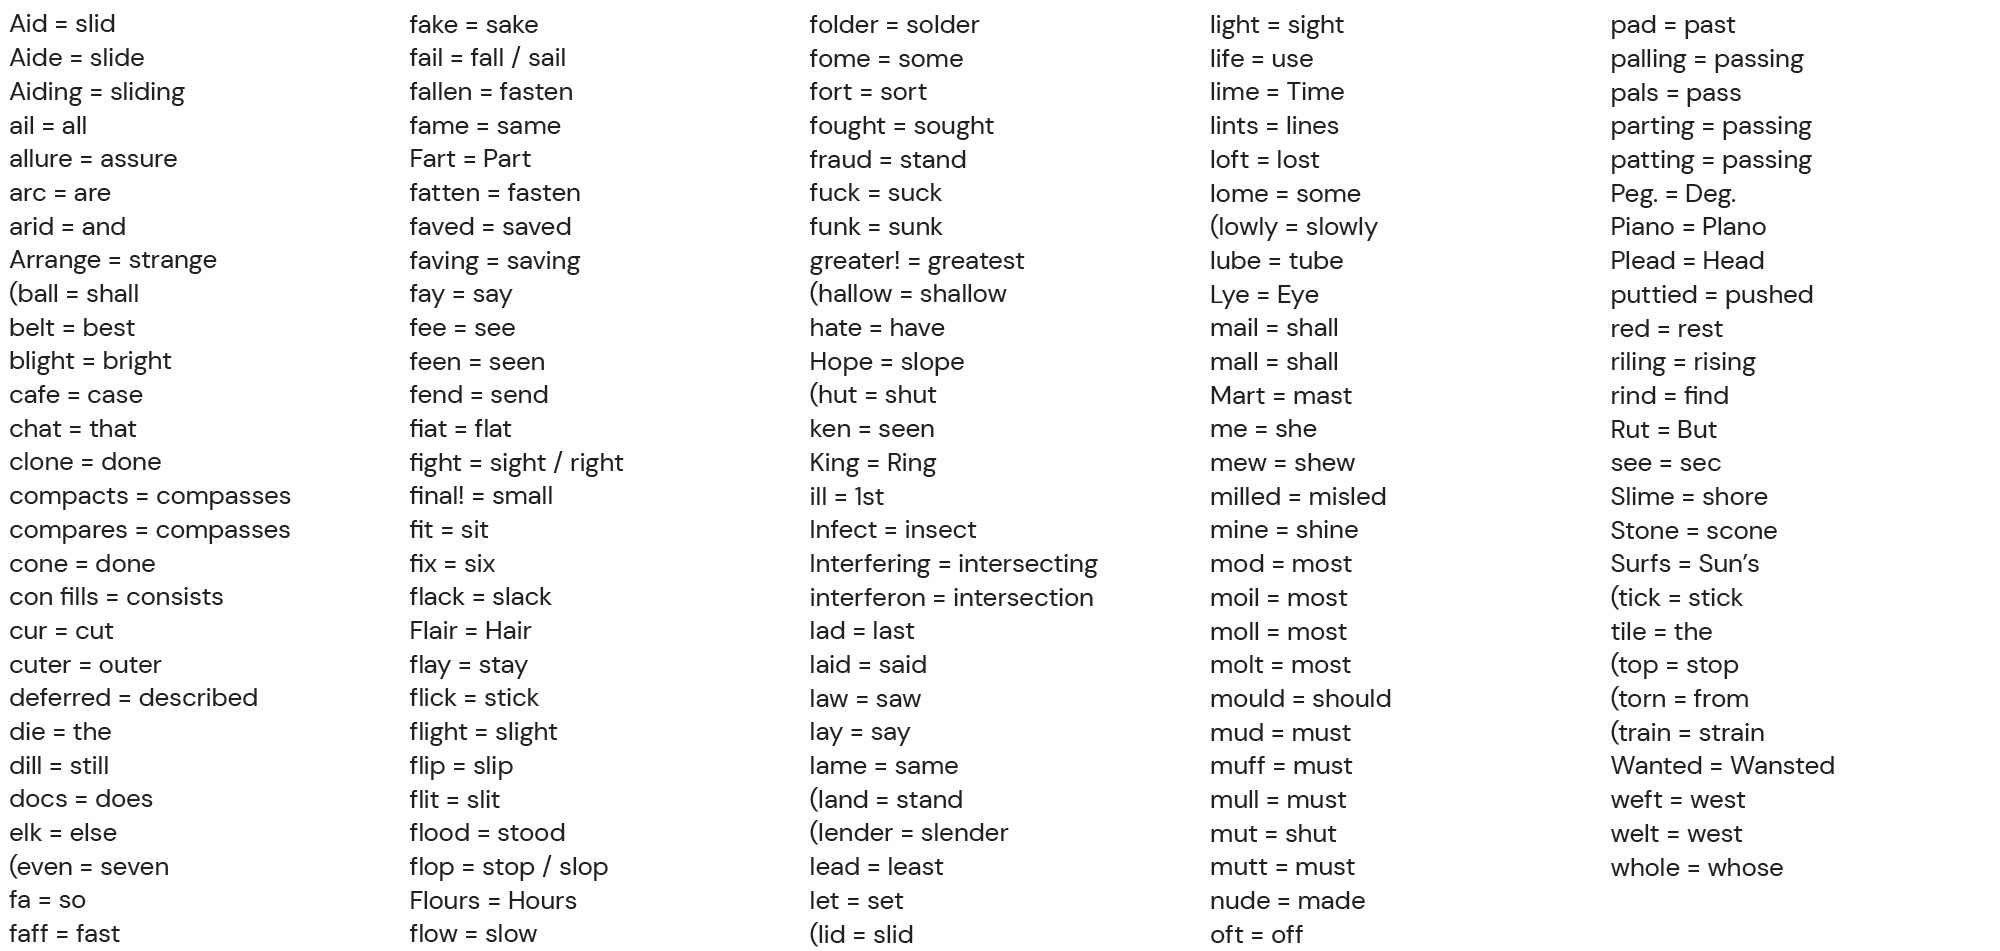 List of non-misspelled words